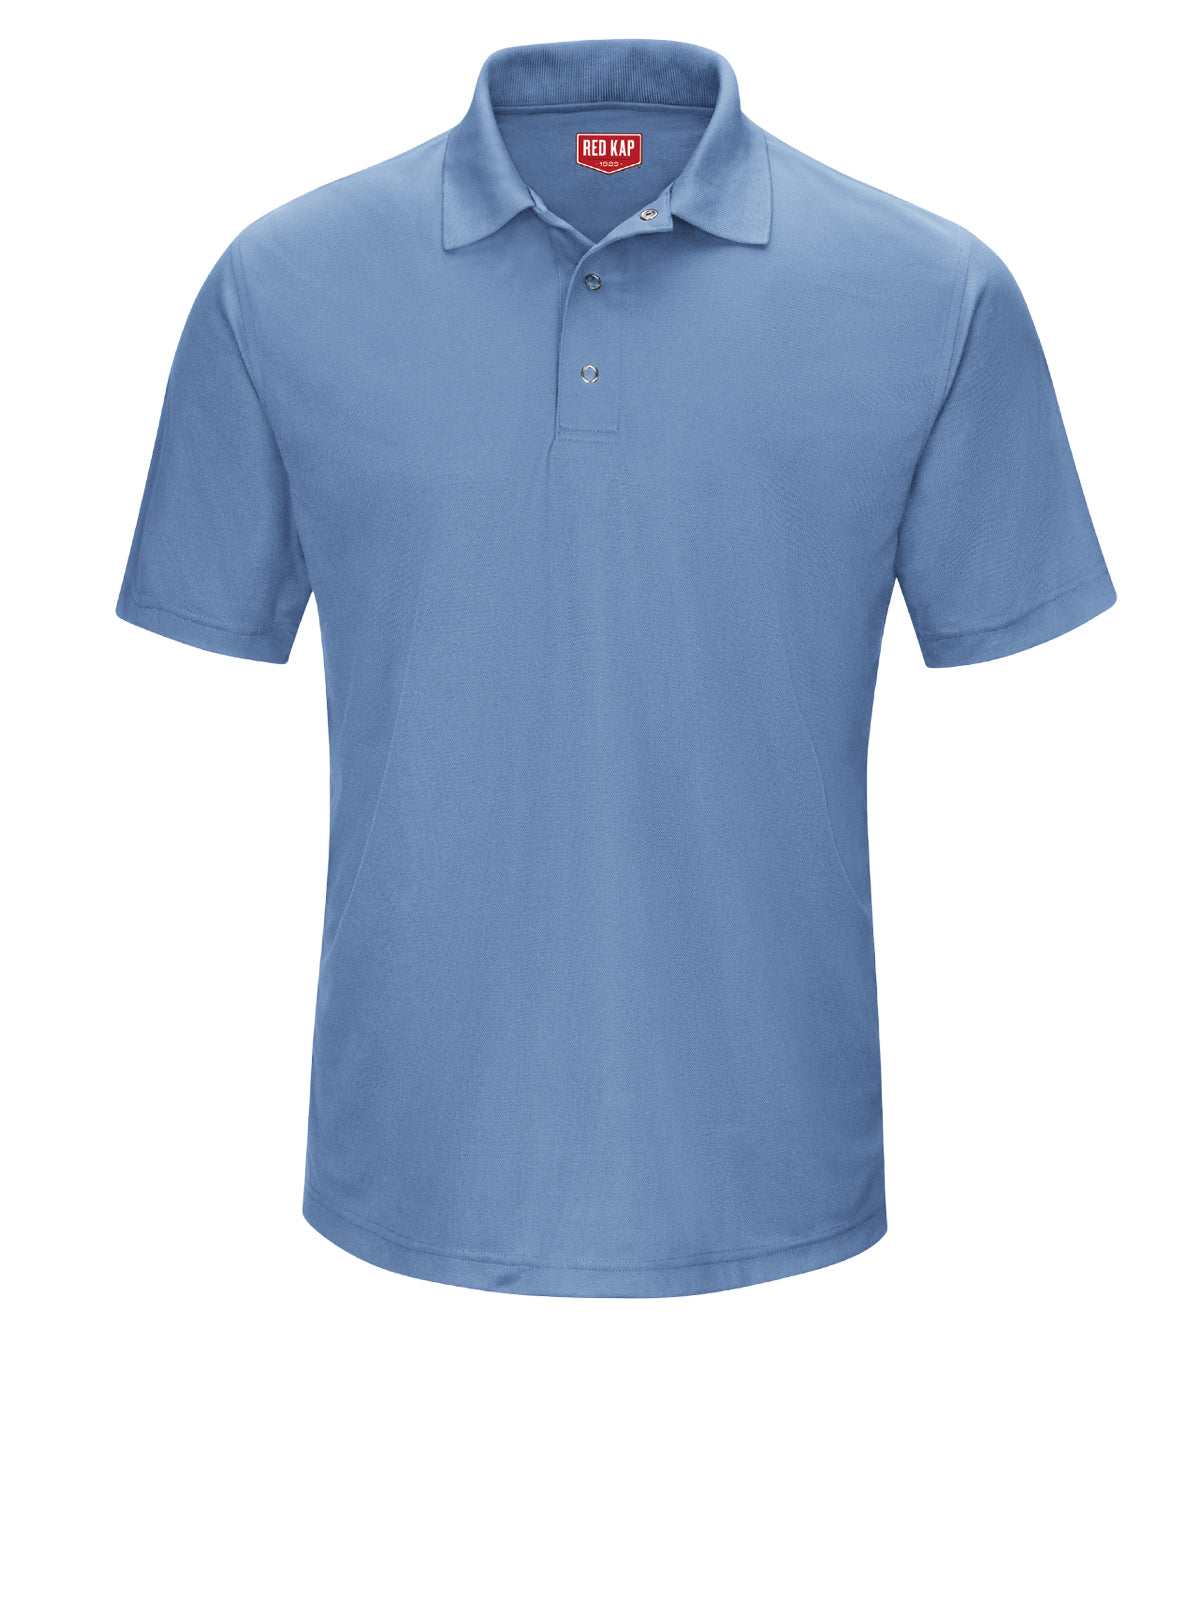 Men's Short Sleeve Performance Knit Gripper-Front Polo - SK74 - Medium Blue